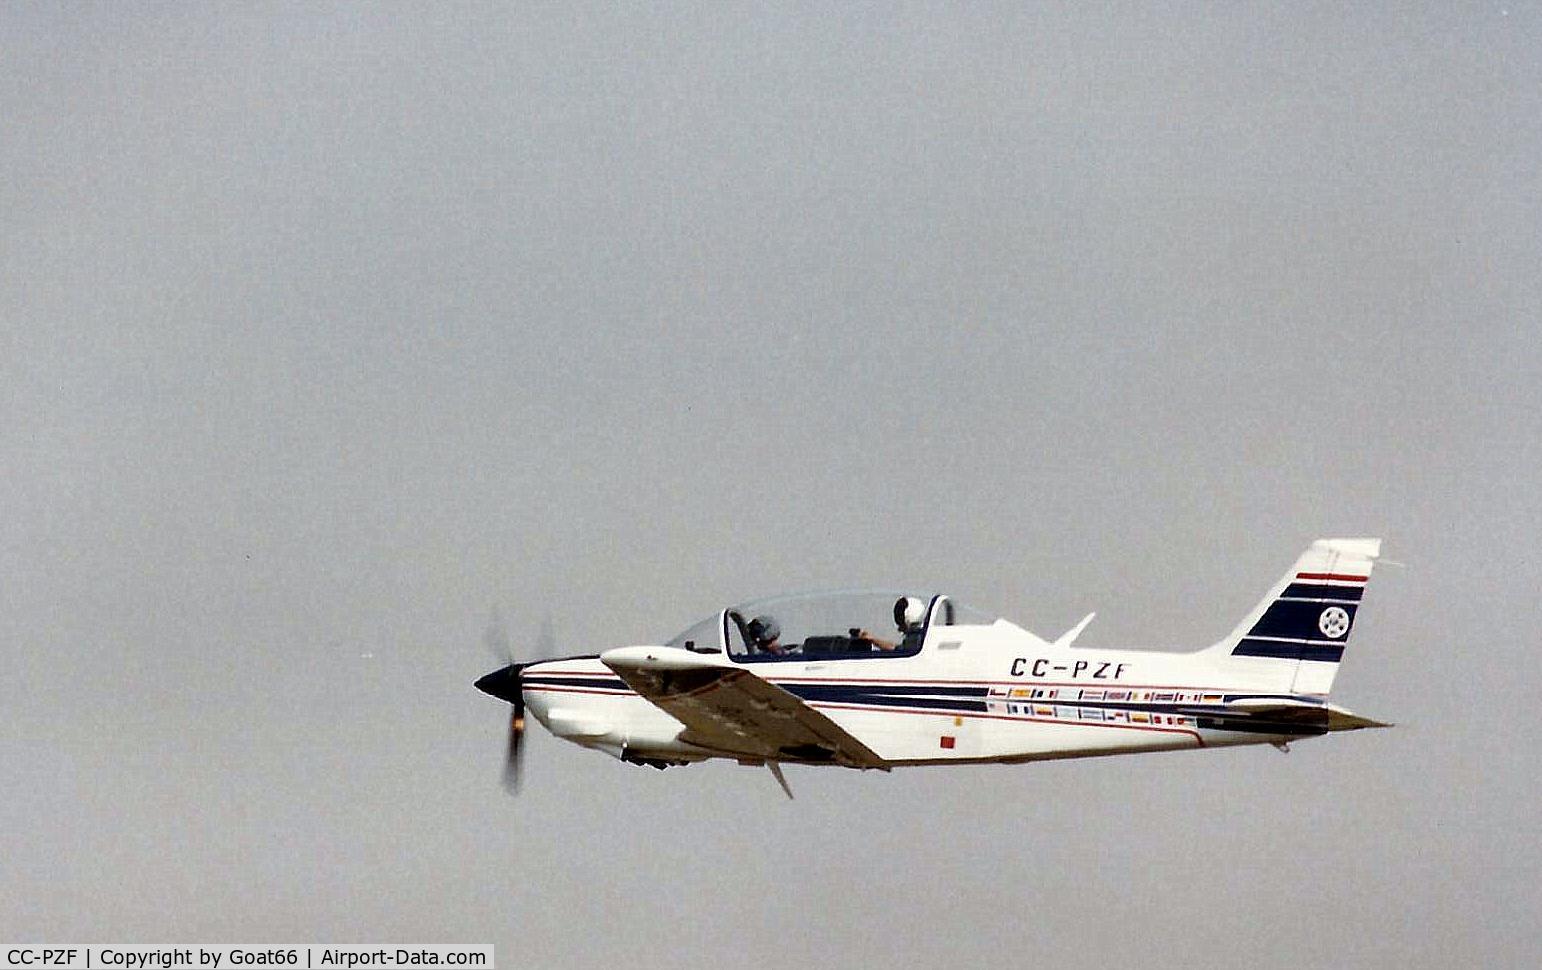 CC-PZF, Enaer T-35 Pillán C/N 166, Departing the IAT89 flying display, RAF Fairford 1989